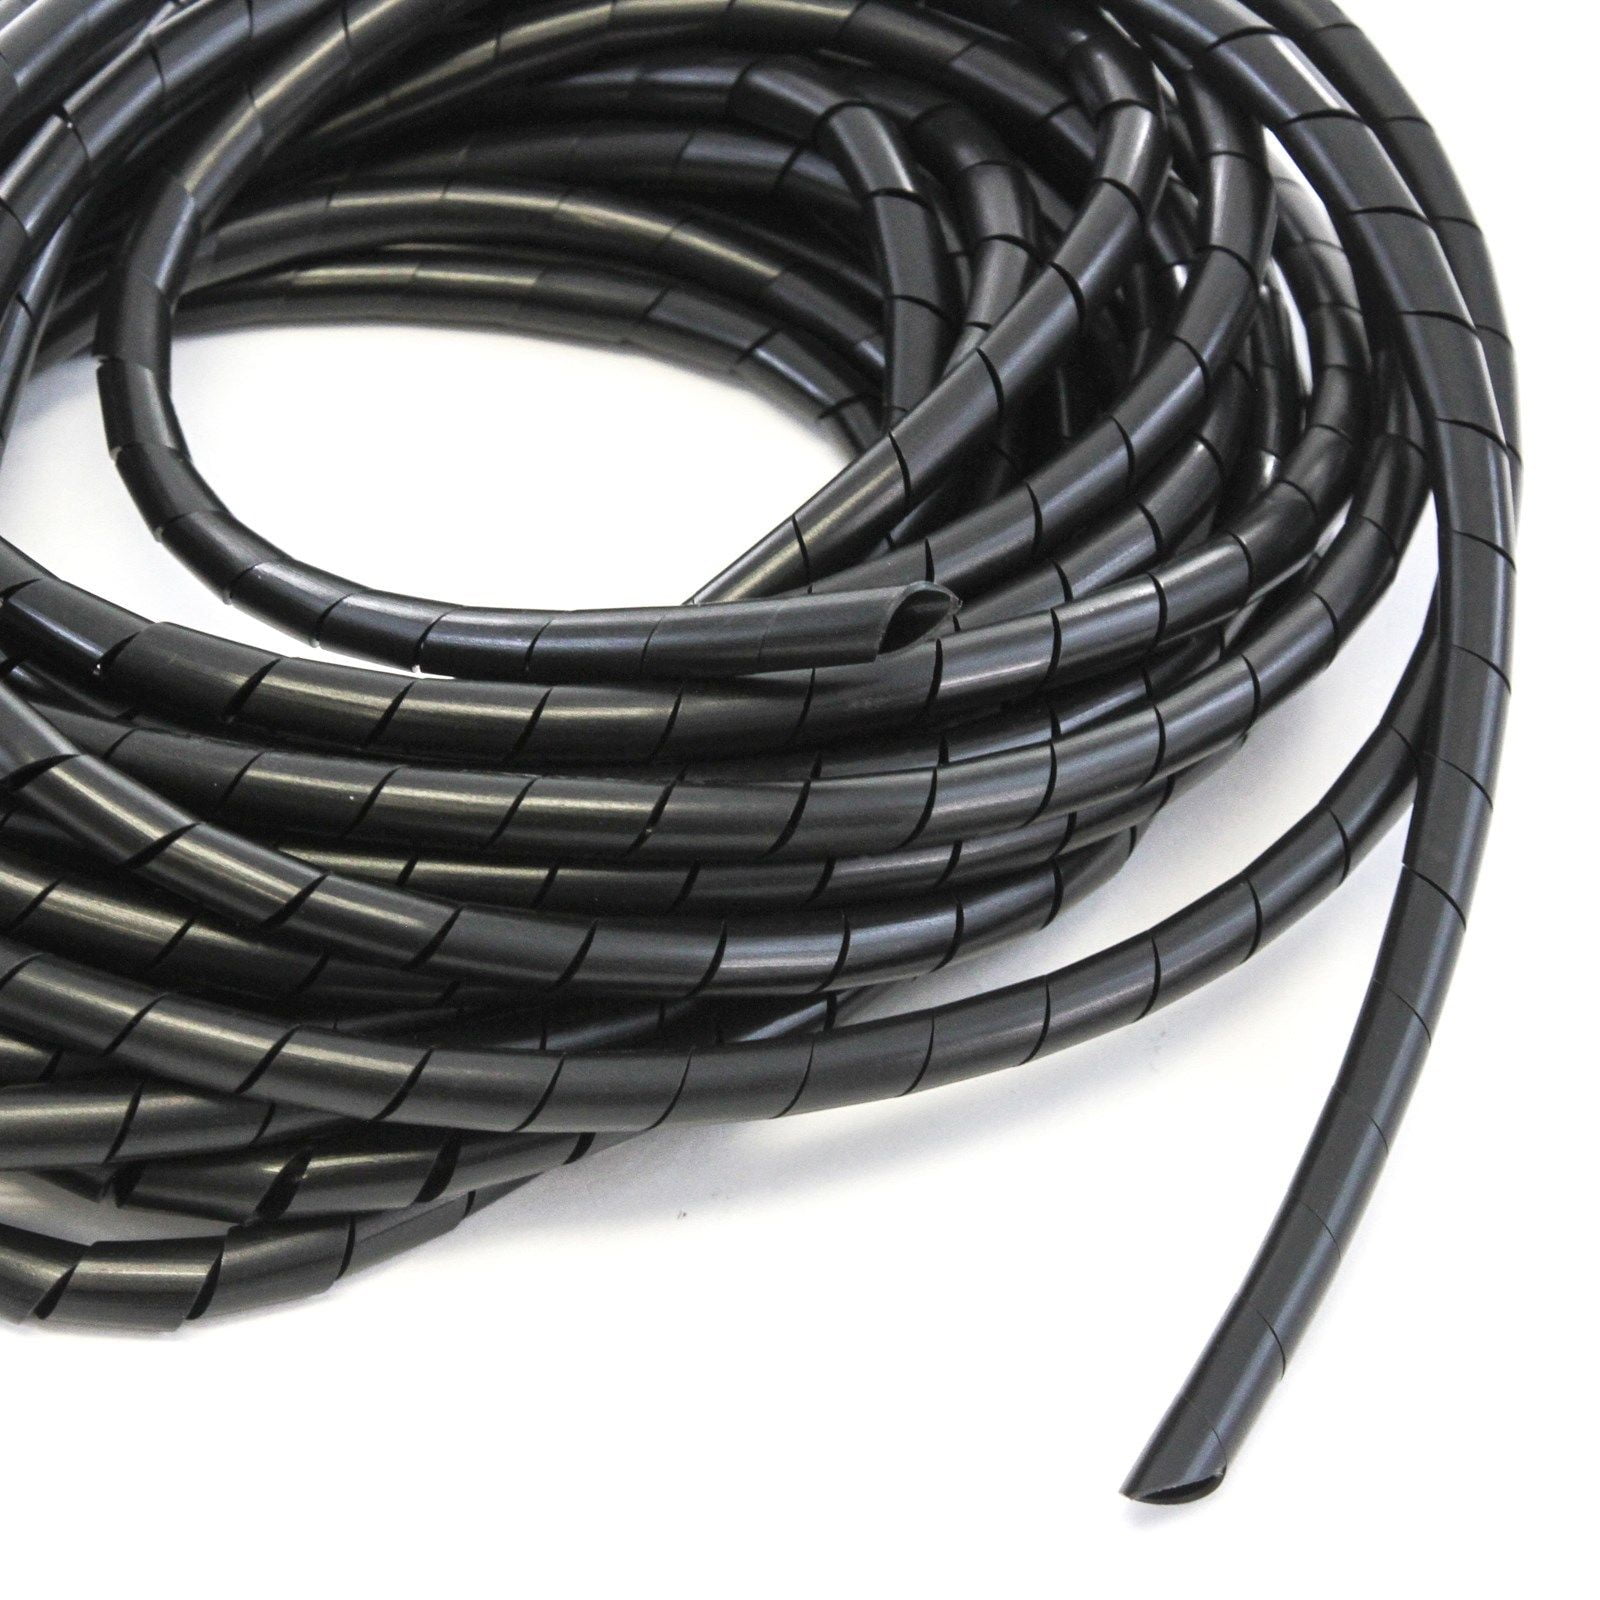 Spiral Wrap, Ø:1/2 Length:10' Black Plastic Cable Cover - Budget